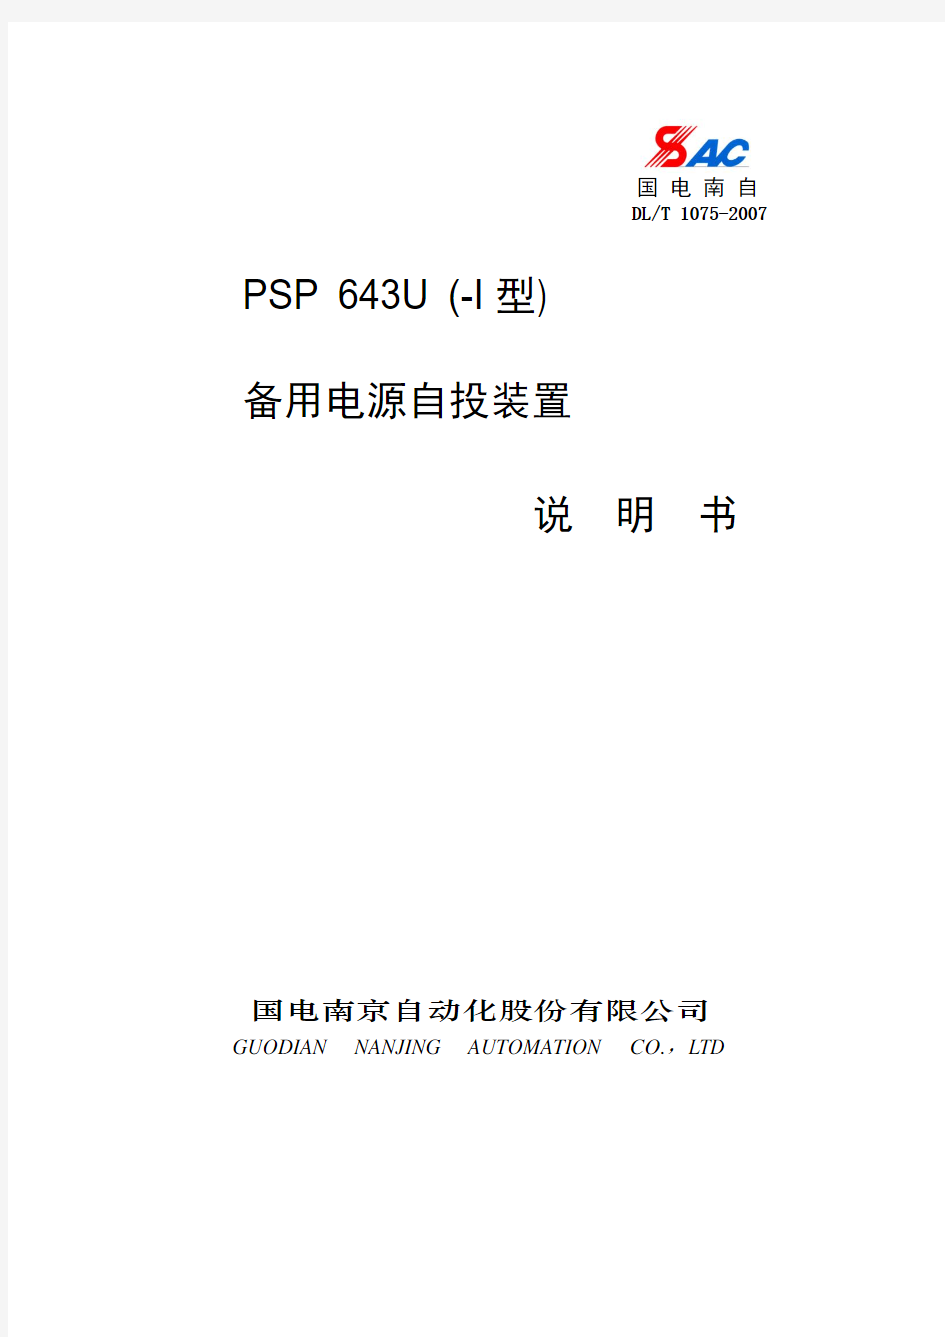 PSP643U(-I型)说明书v1.1